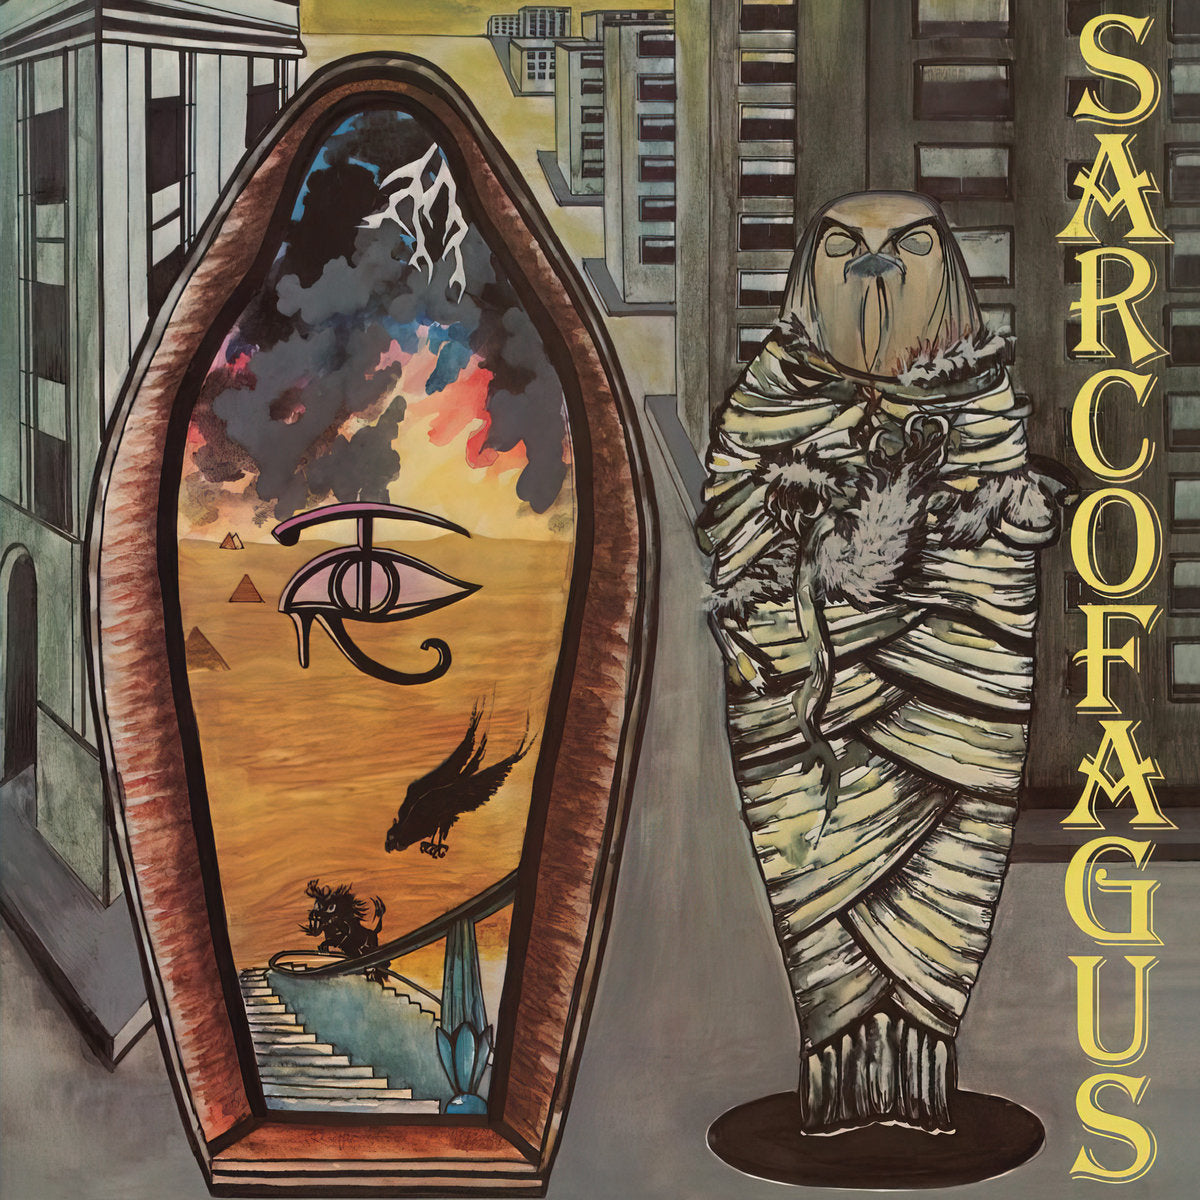 Sarcofagus - Cycle of Life